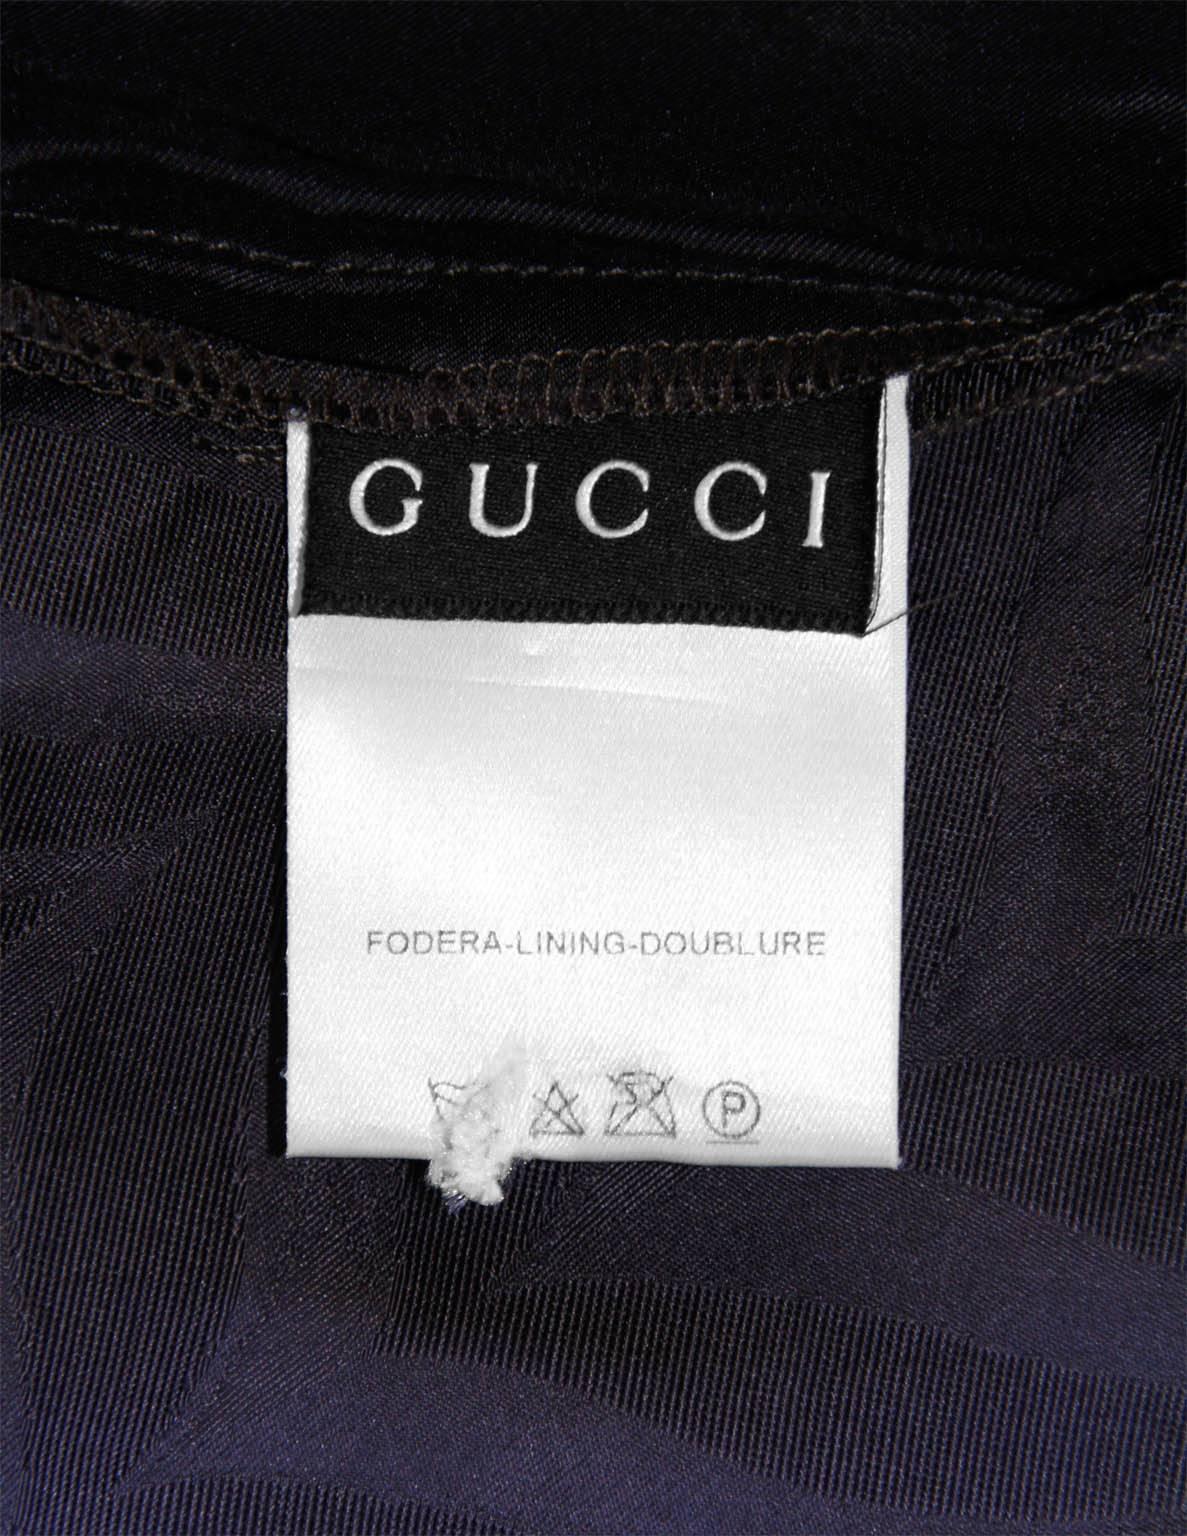 Iconic Tom Ford Gucci FW 02 Silk Kimono Jacket, Pants & Obi In Italian Size 42! 6